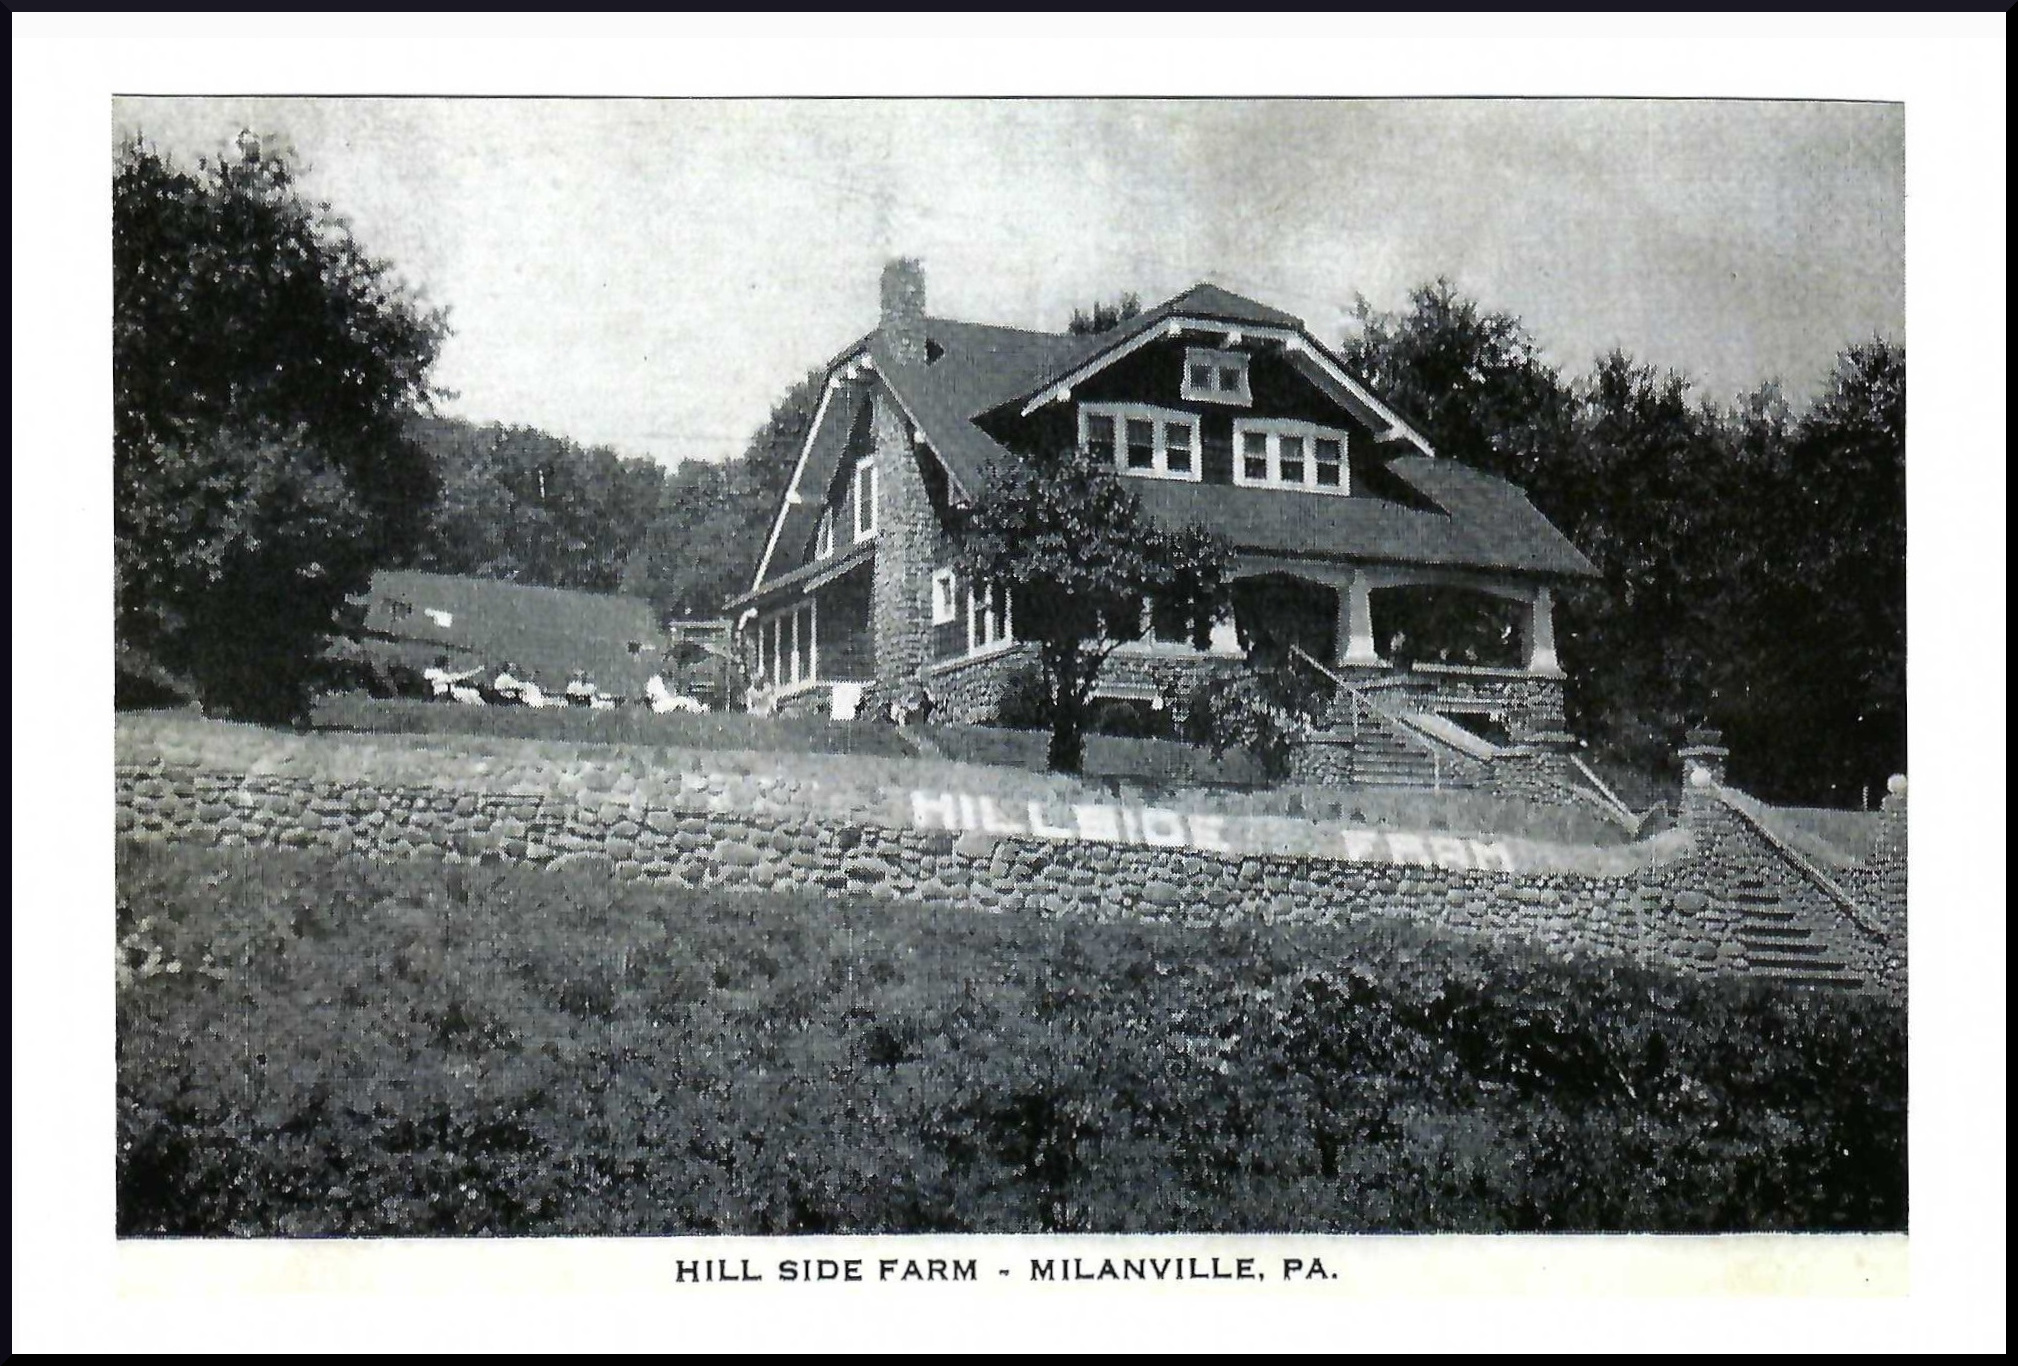 Hill Side Farm, Milanville, Pa. (vintage postcard)